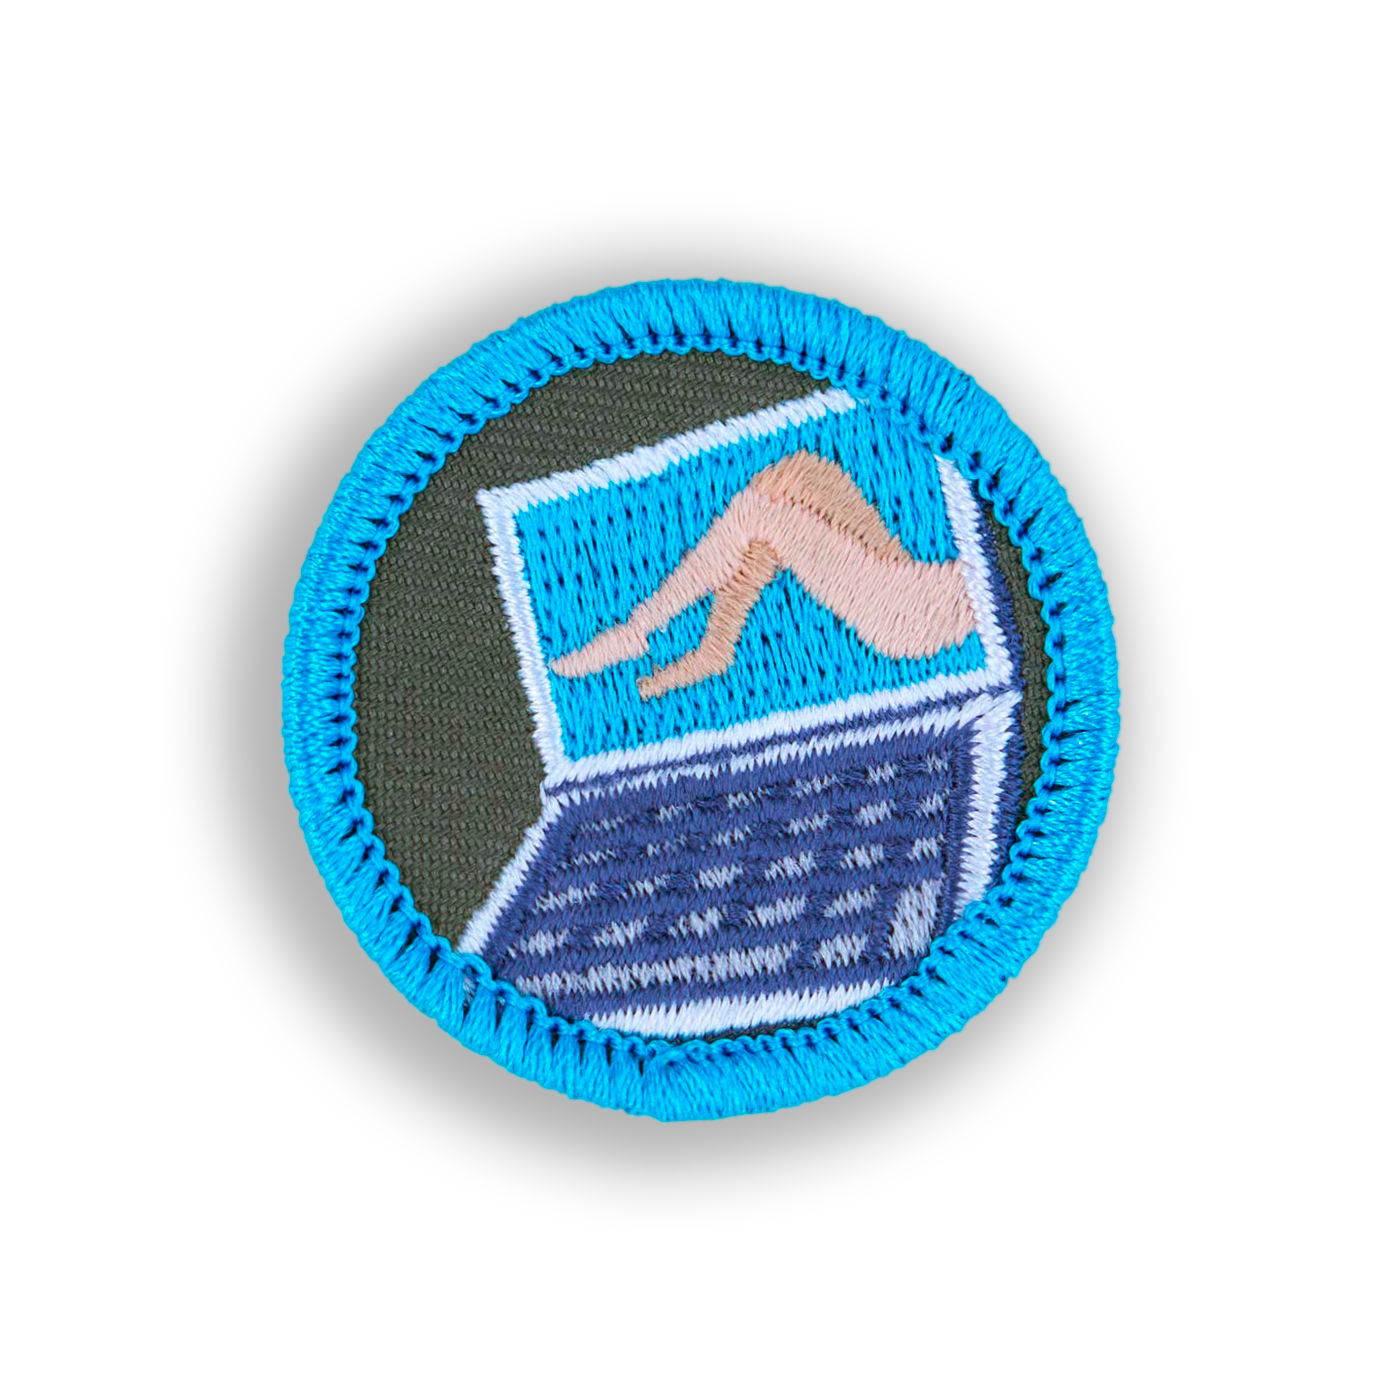 Internet Surfer Patch | Demerit Wear - Fake Merit Badges